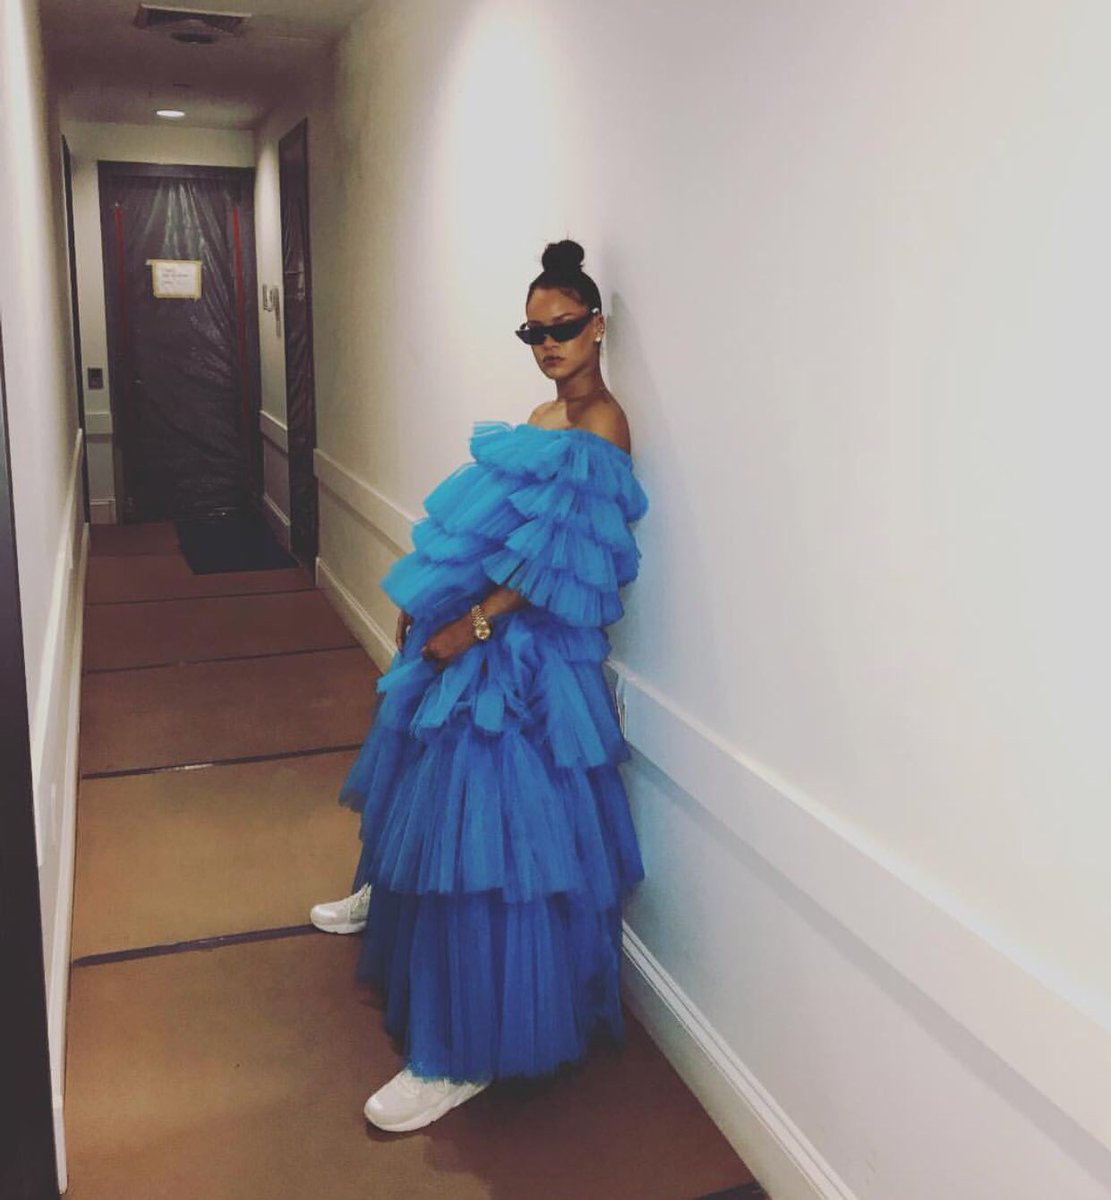 Rihanna wearing Molly Goddard via Instagram @badgalriri